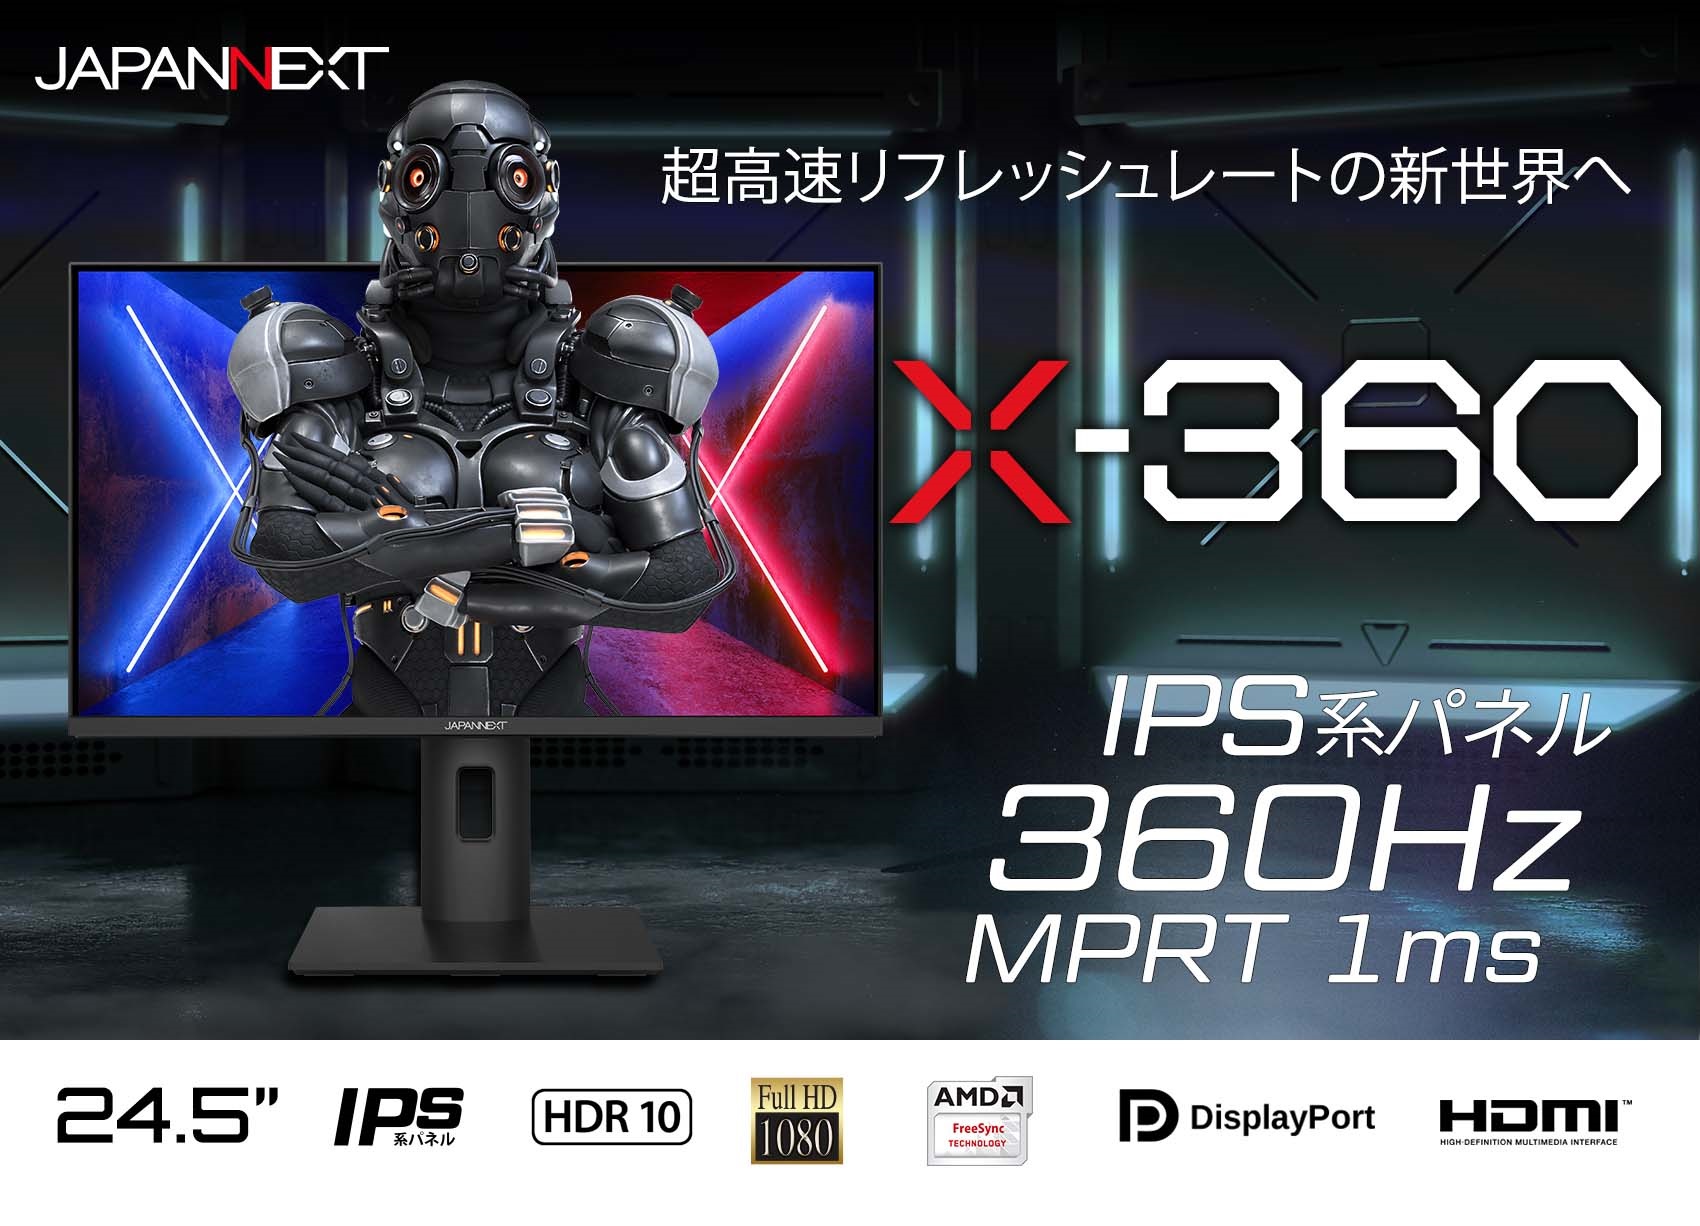 JAPANNEXT 「X-360」<br> IPS系パネル搭載 360Hz対応ゲーミング